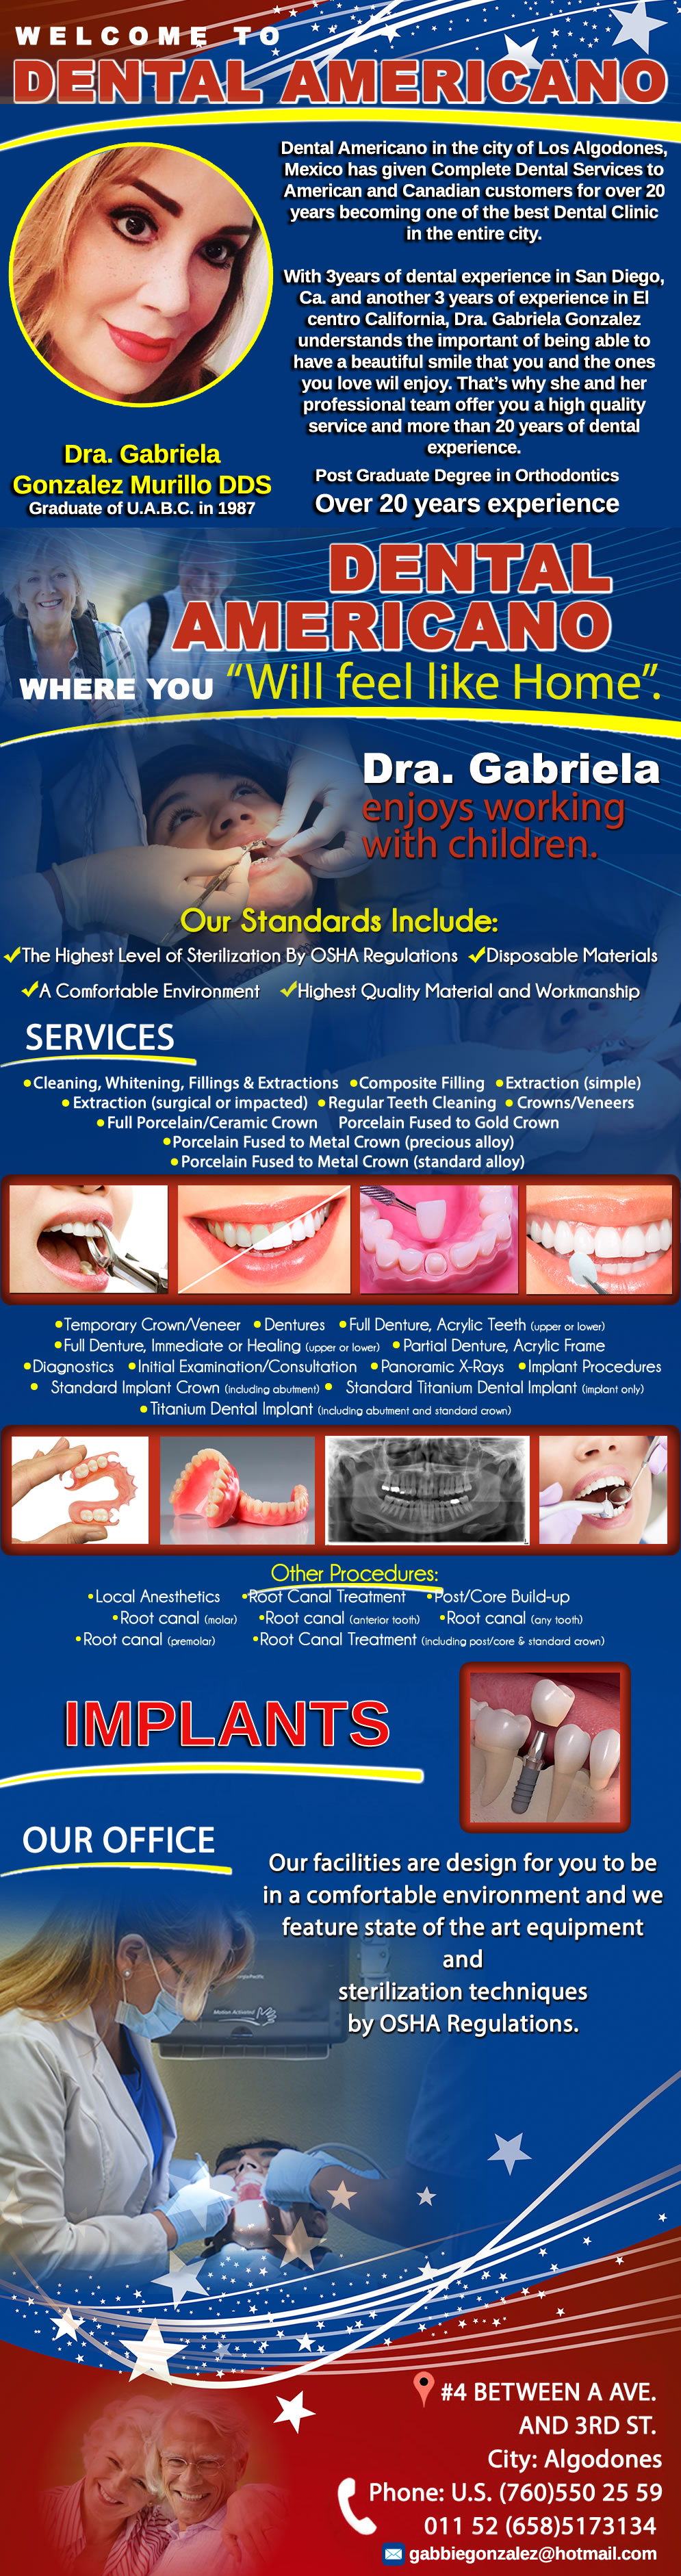 DENTAL AMERICANO DDS DRA. GABRIELA GONZALEZ M.-General Dentistry and Specialists We offer complete dental services including general dentistry, cosmetic dentistry, periodontics, endodontics, orthodontics and dental implants. Bridges °X-Rays °Porcelain Veneers °Metal Crowns °Dental Bonding °Deep Cleaning °Denture Repair         